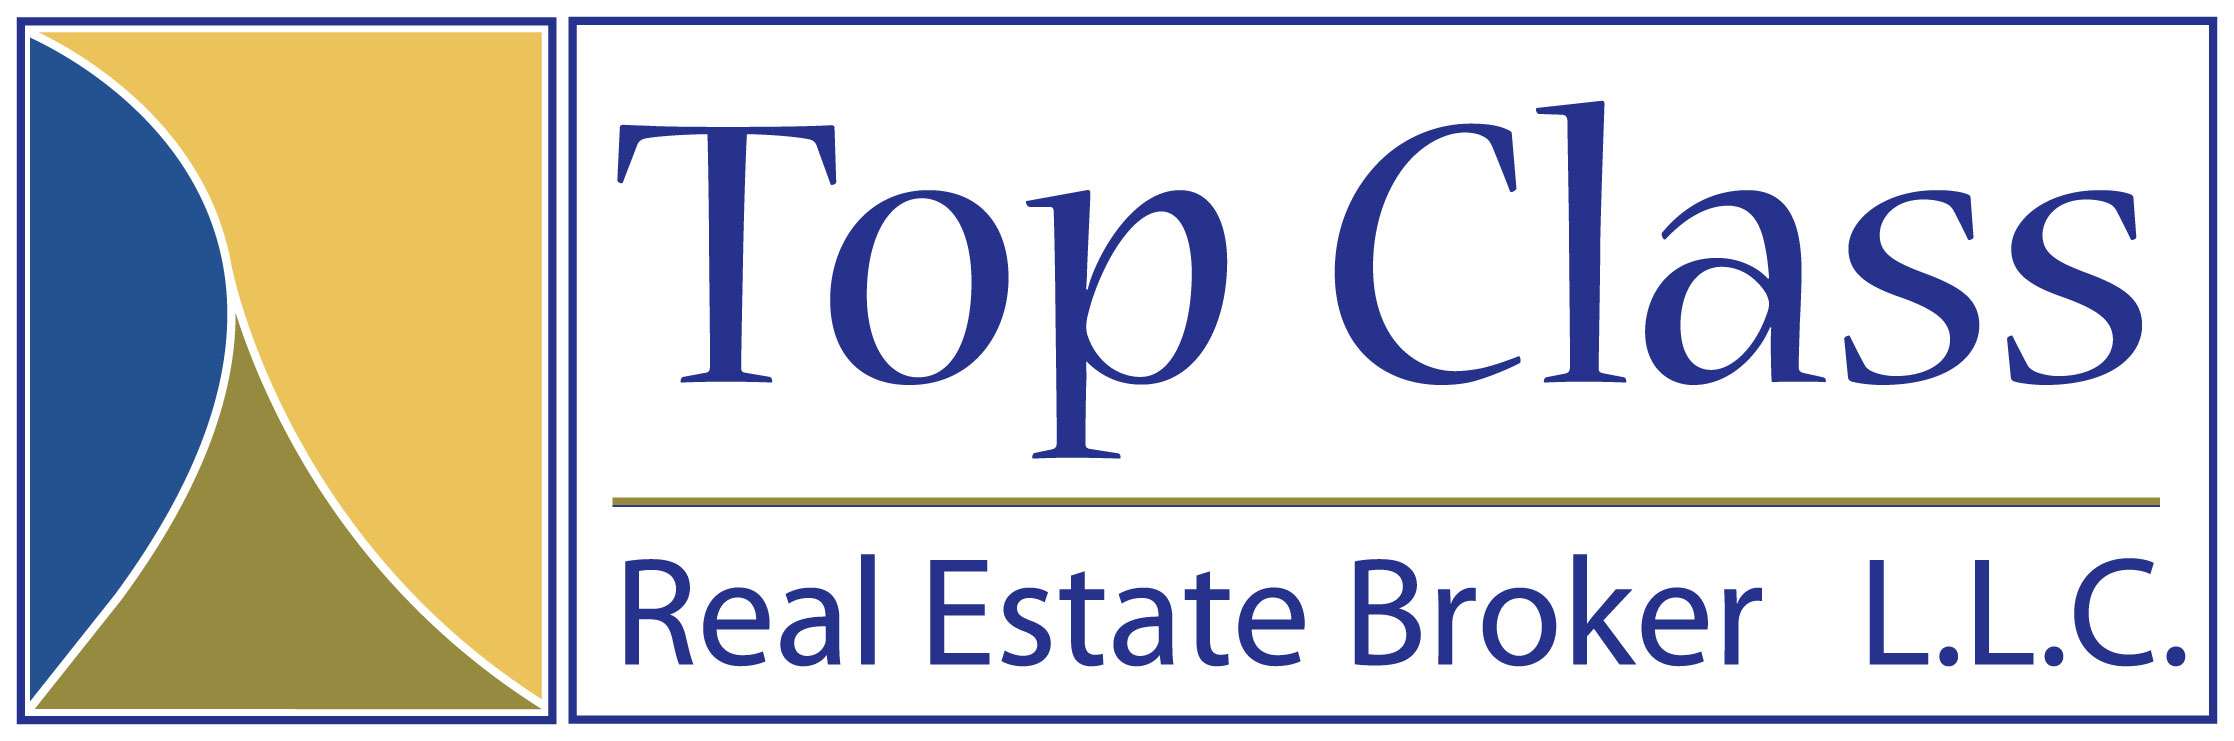 Top Class Real Estate Broker Logo